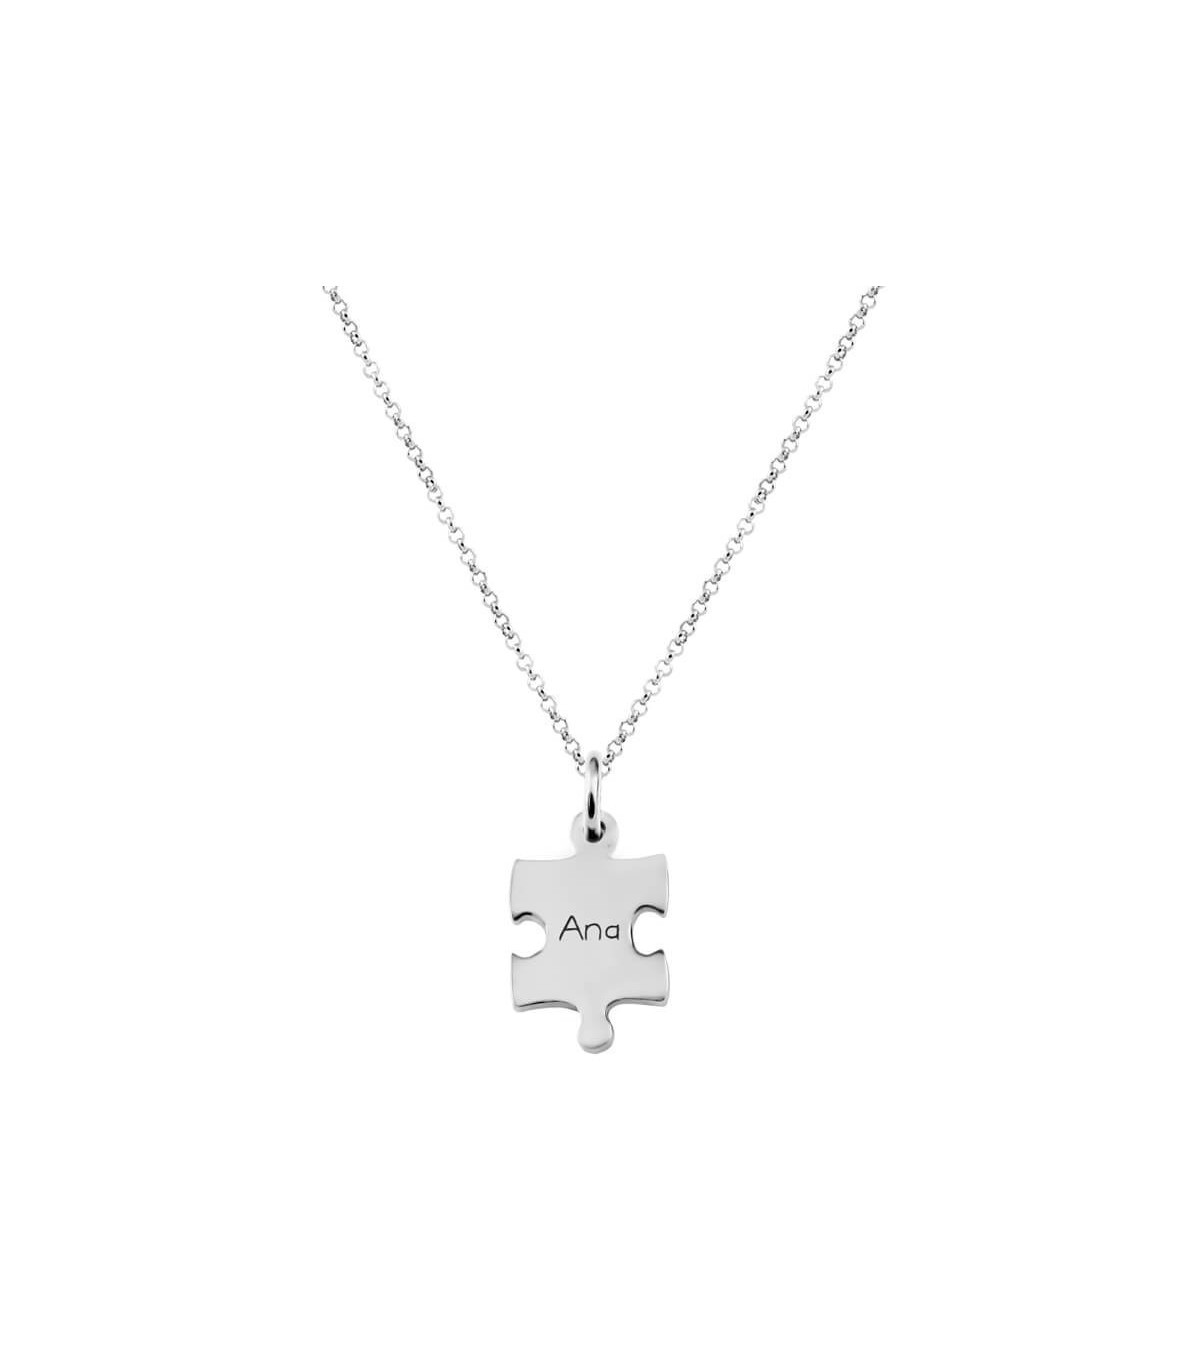 Tipsyfly White Enamel Puzzle Necklace, 53% OFF